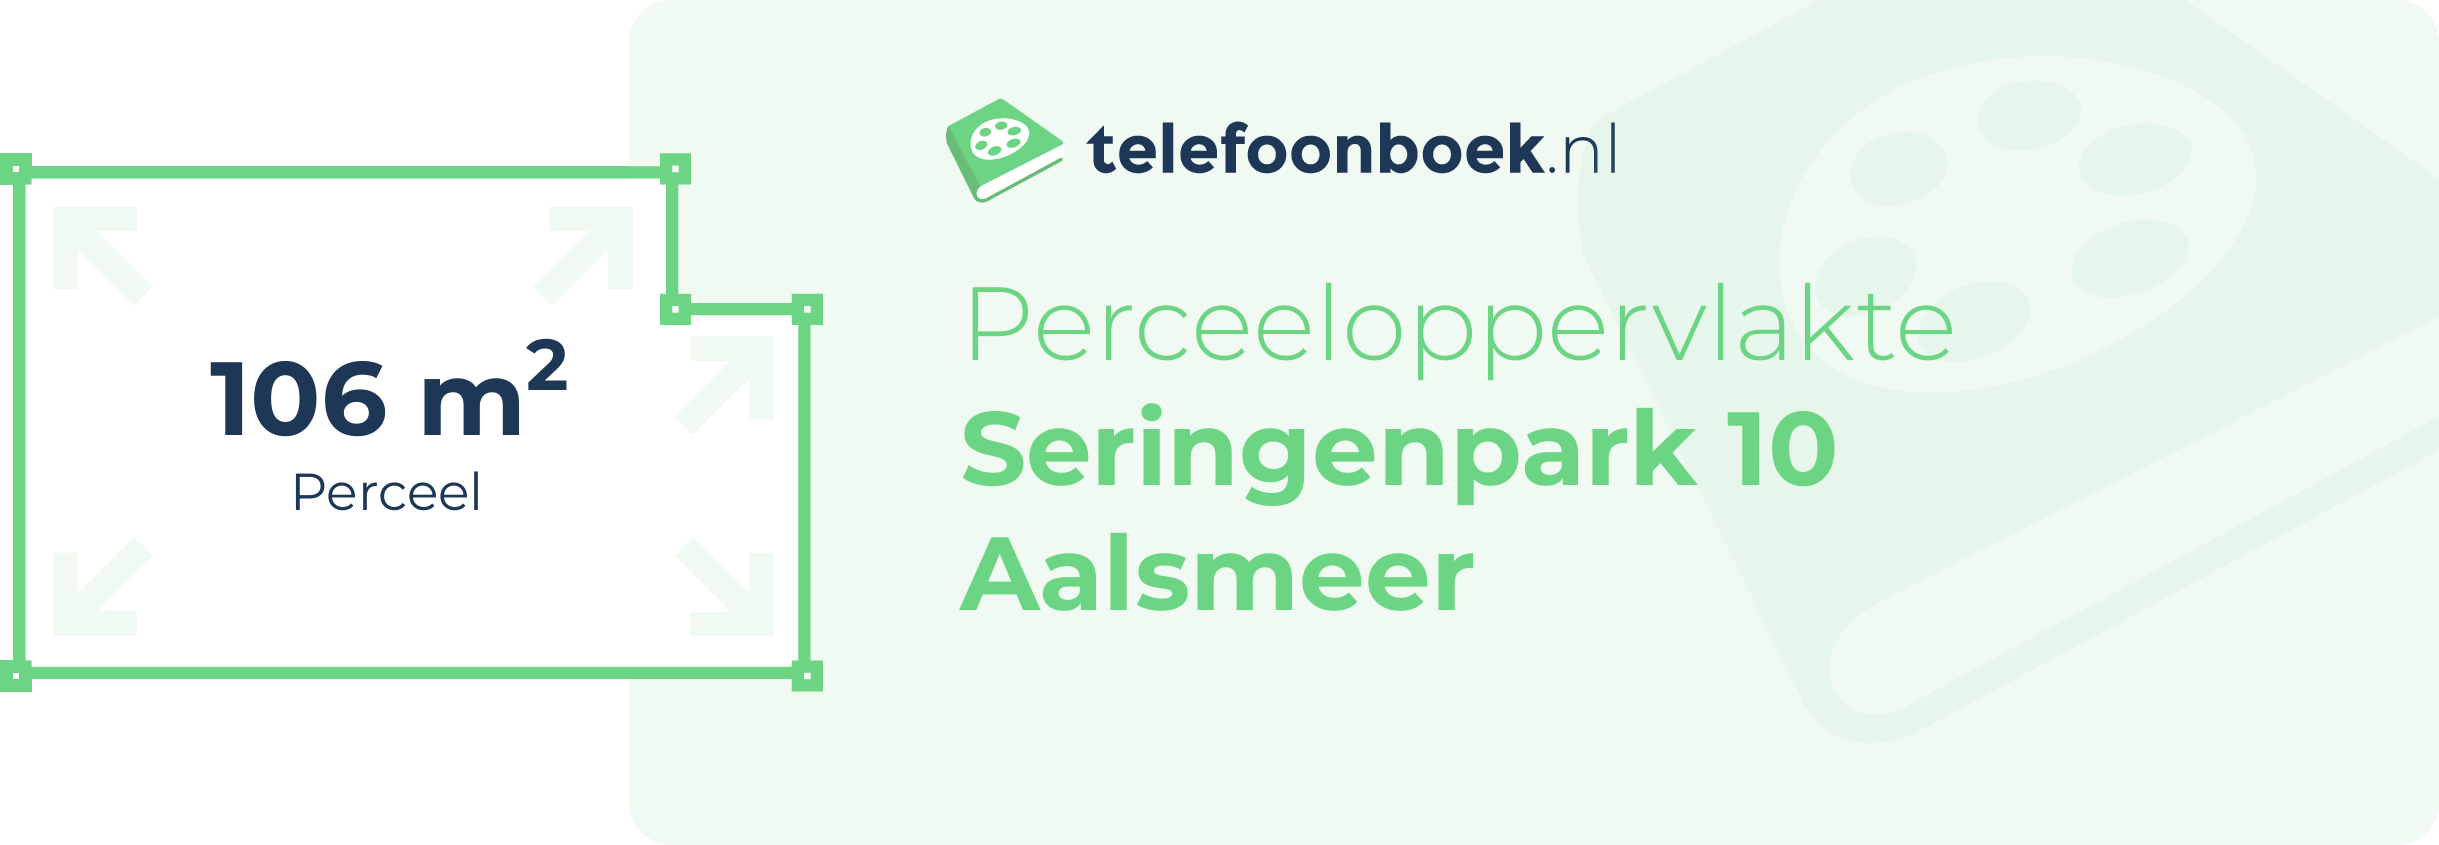 Perceeloppervlakte Seringenpark 10 Aalsmeer